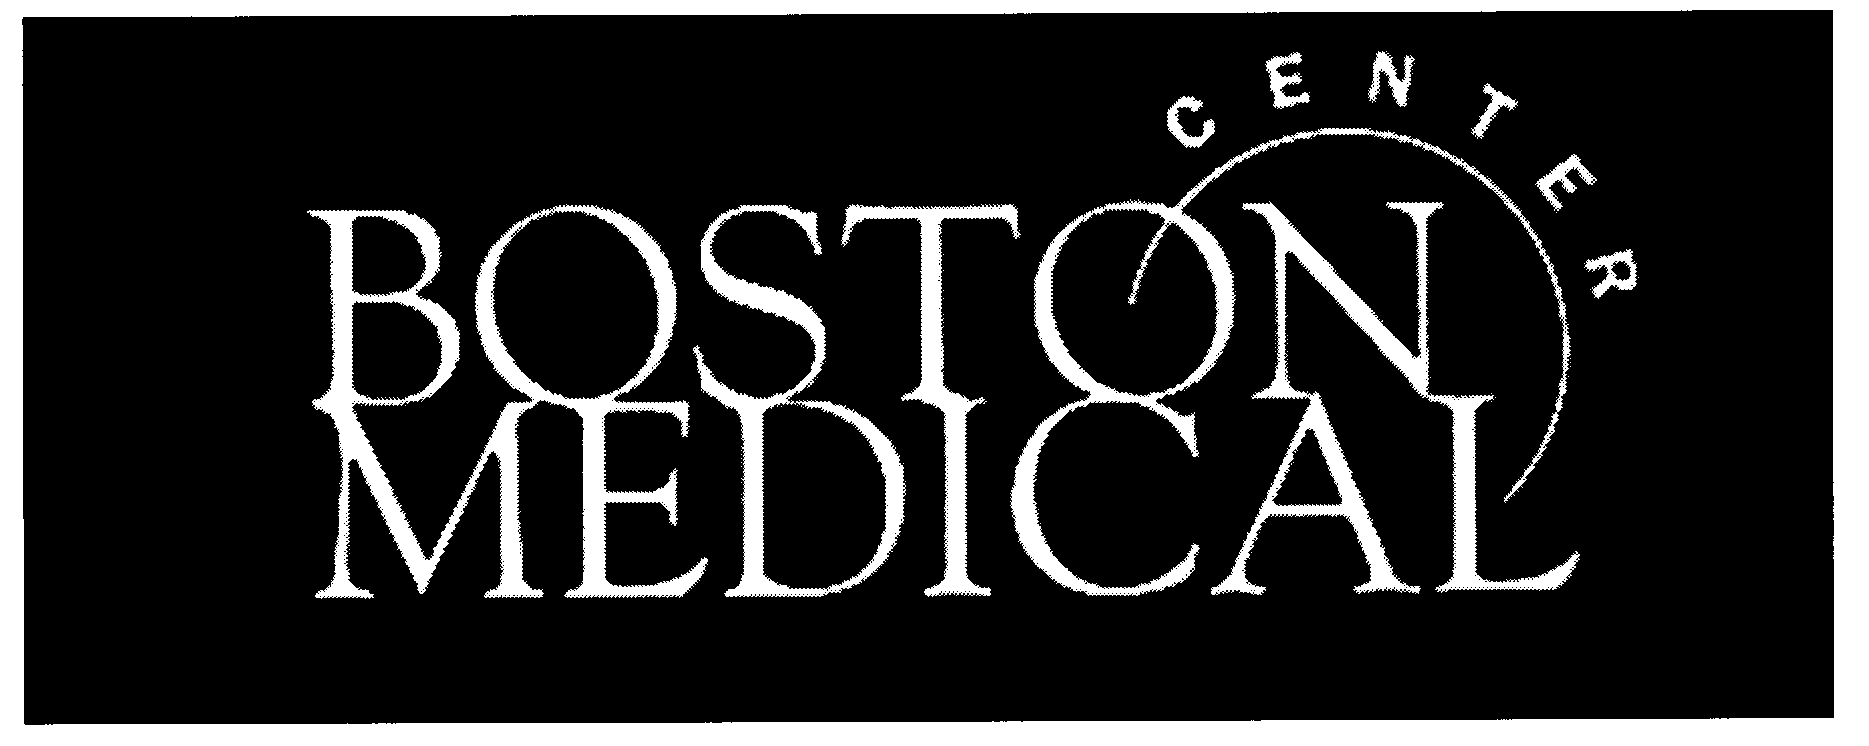  BOSTON MEDICAL CENTER